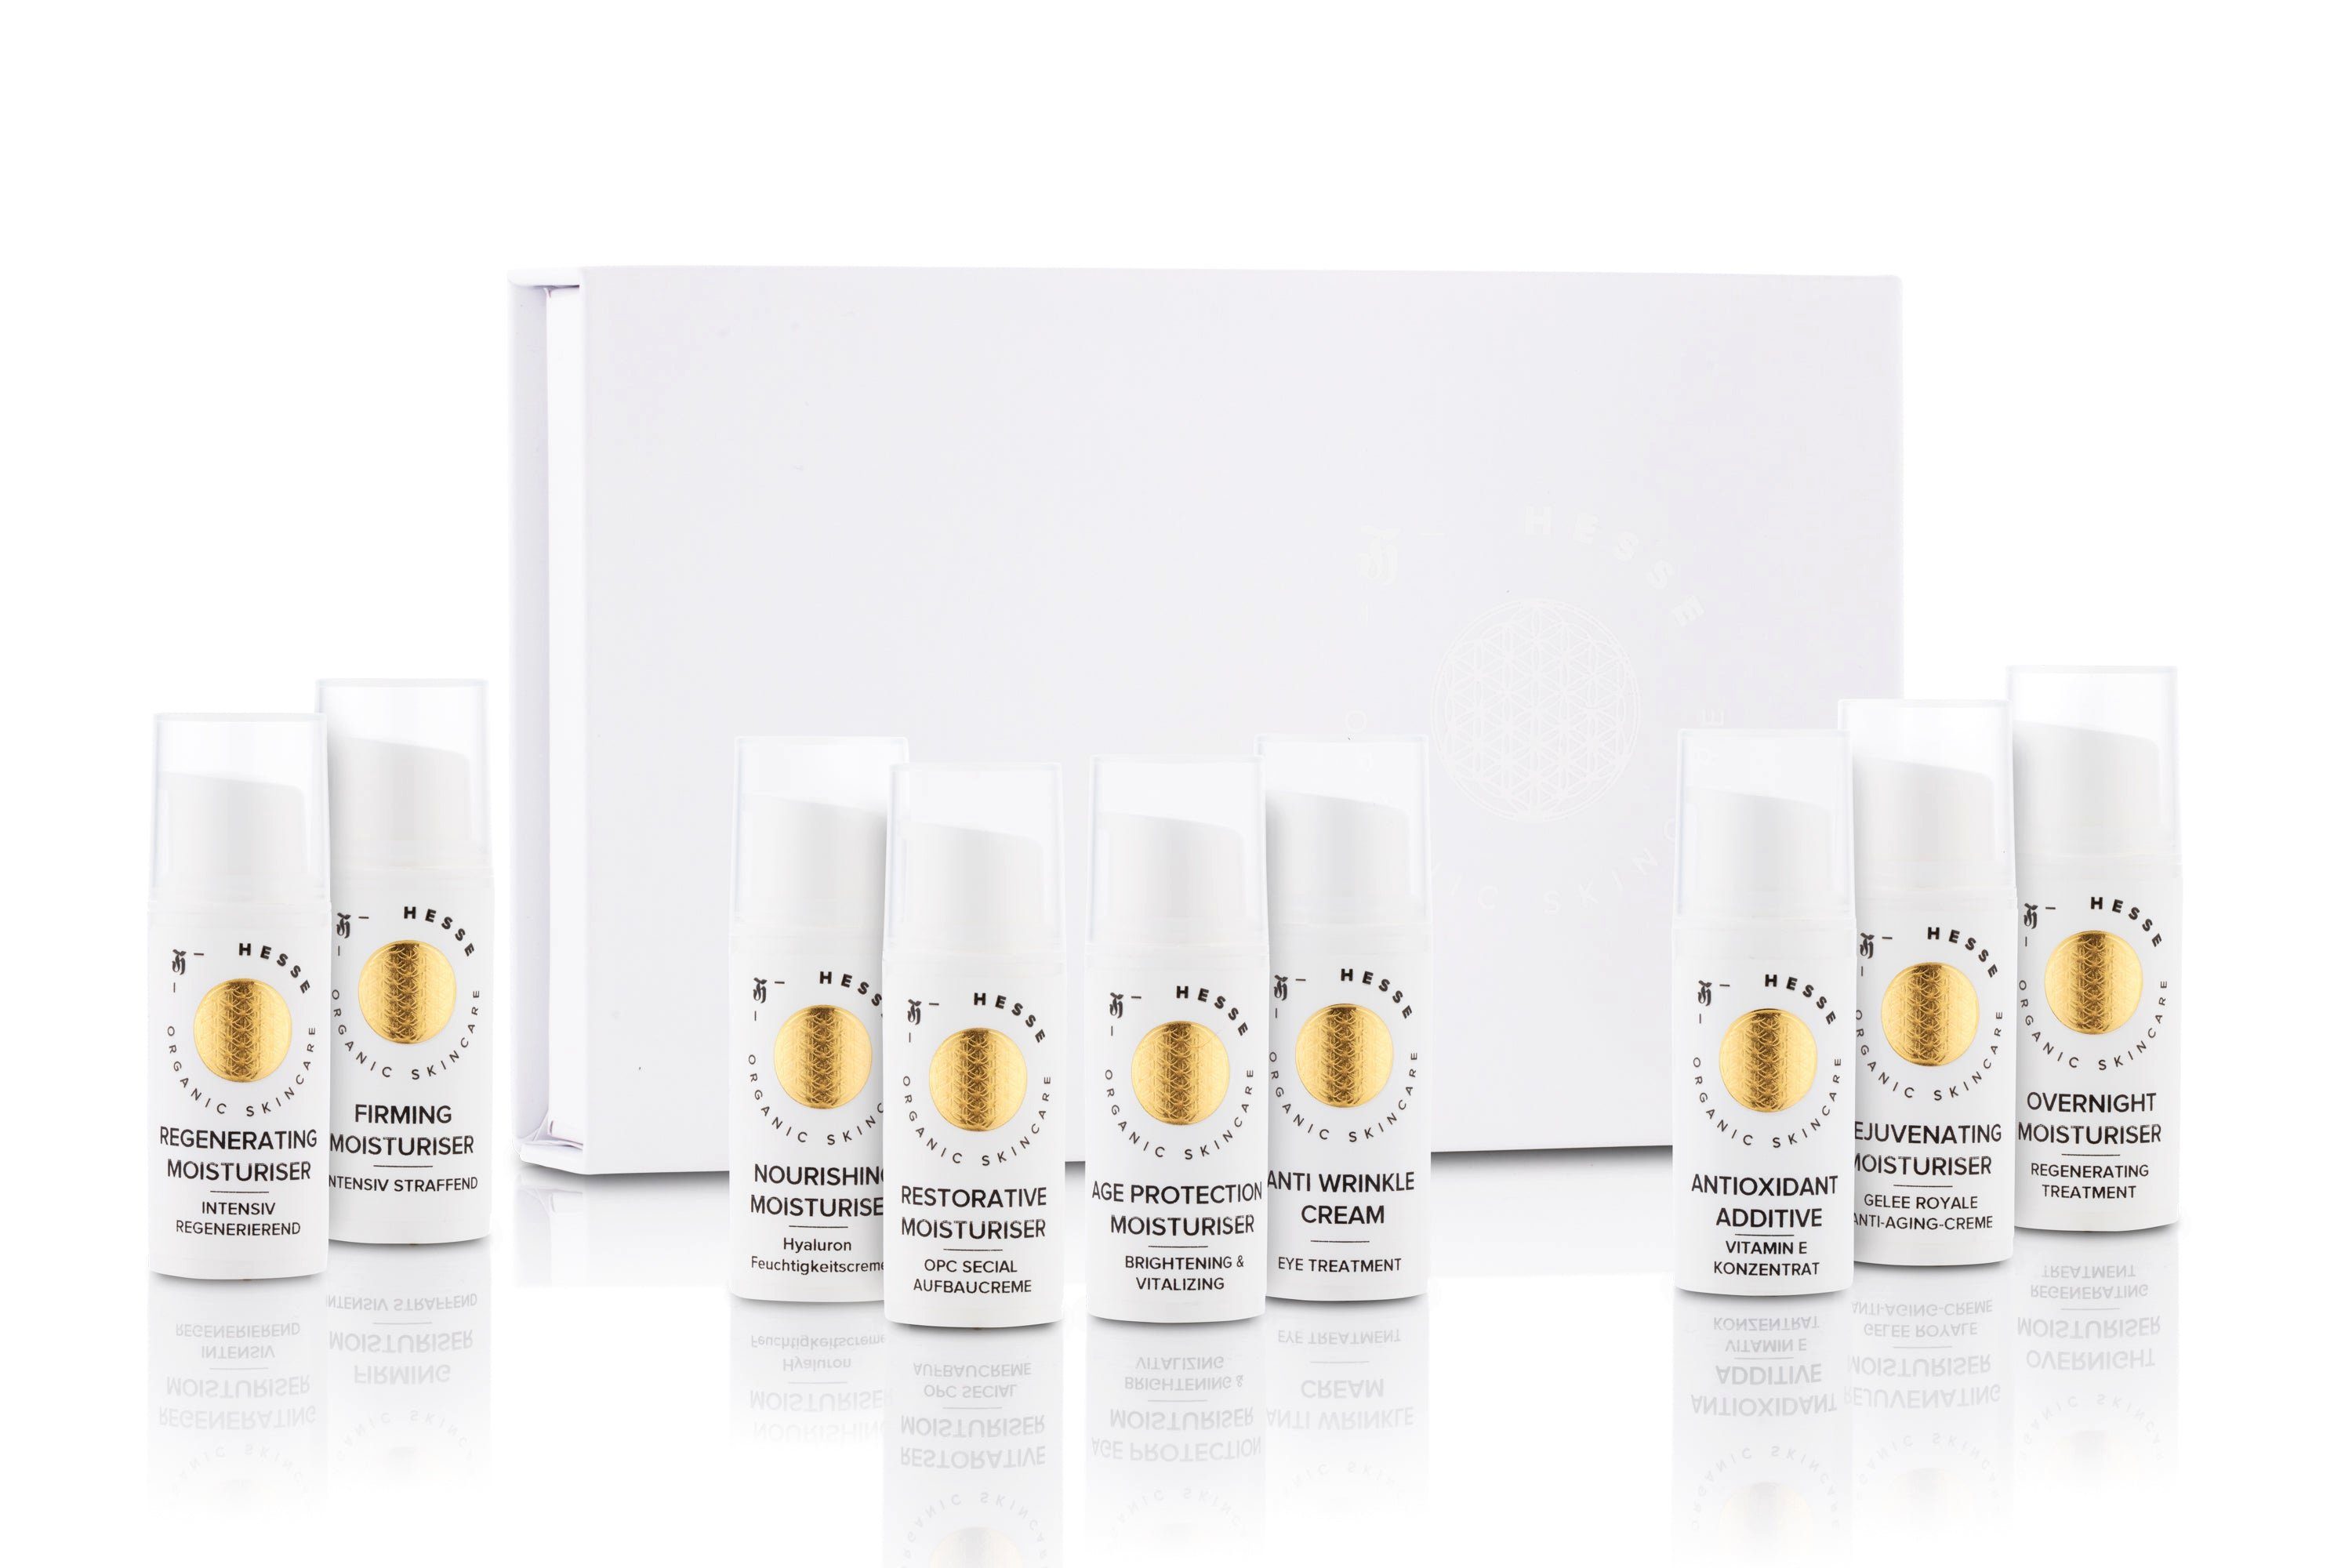 Hesse Organic Skincare Gesichtspflege-Set PROBIERSET – 6 Tagescremen, 1 Nacht-, 1 Augencreme, 1 Vitamin E